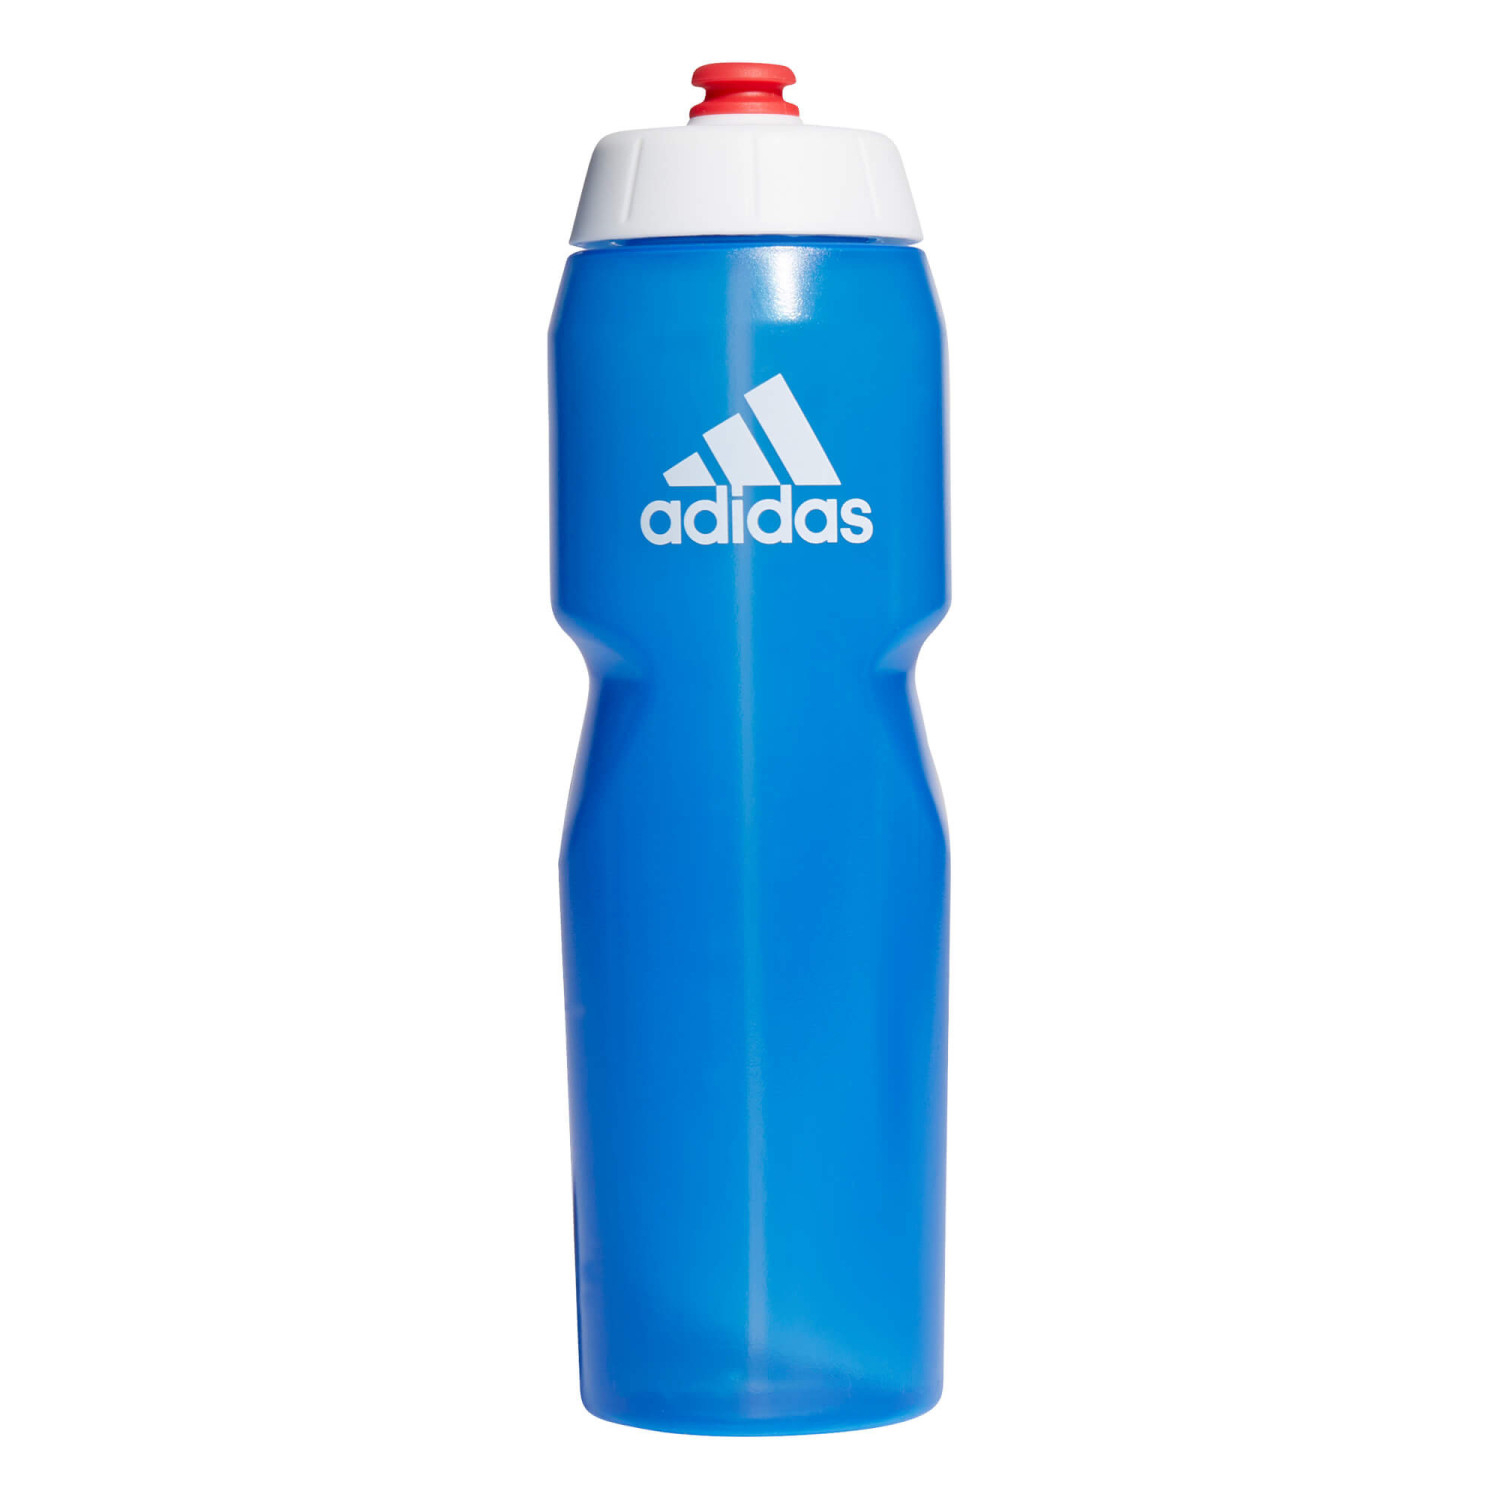 https://olbtqtwiccdn.ol.fr/29858-zoom_default/adidas-blue-water-bottle-75cl.jpg